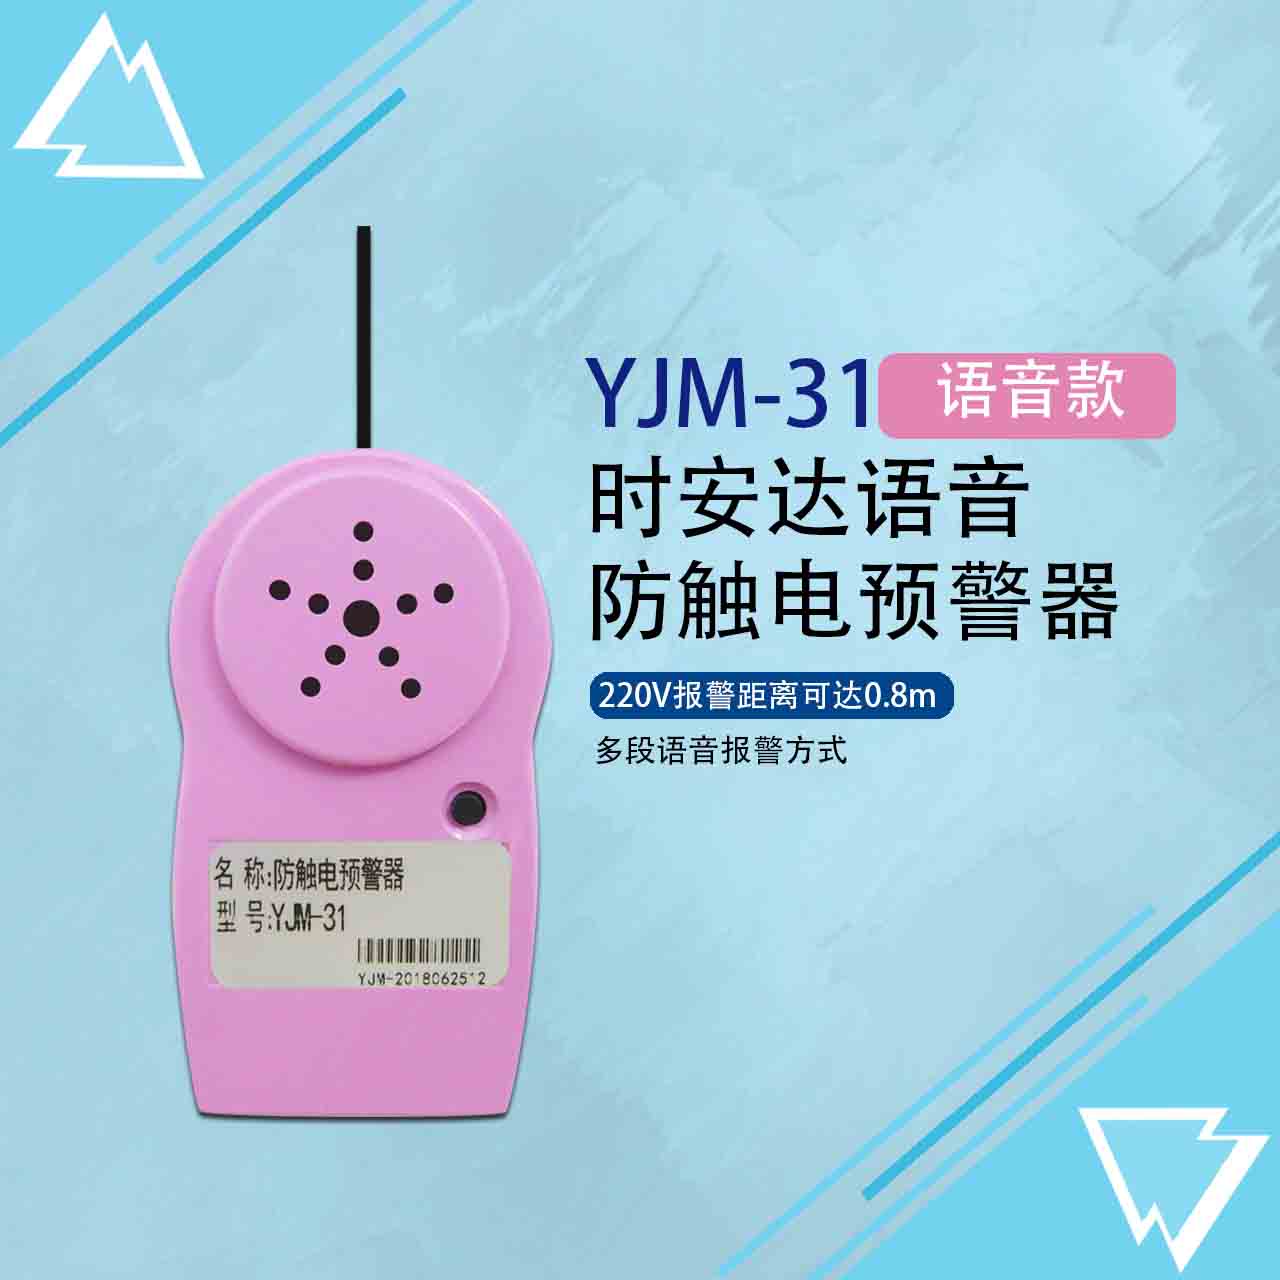 YJM-31时安达®防触电预警器